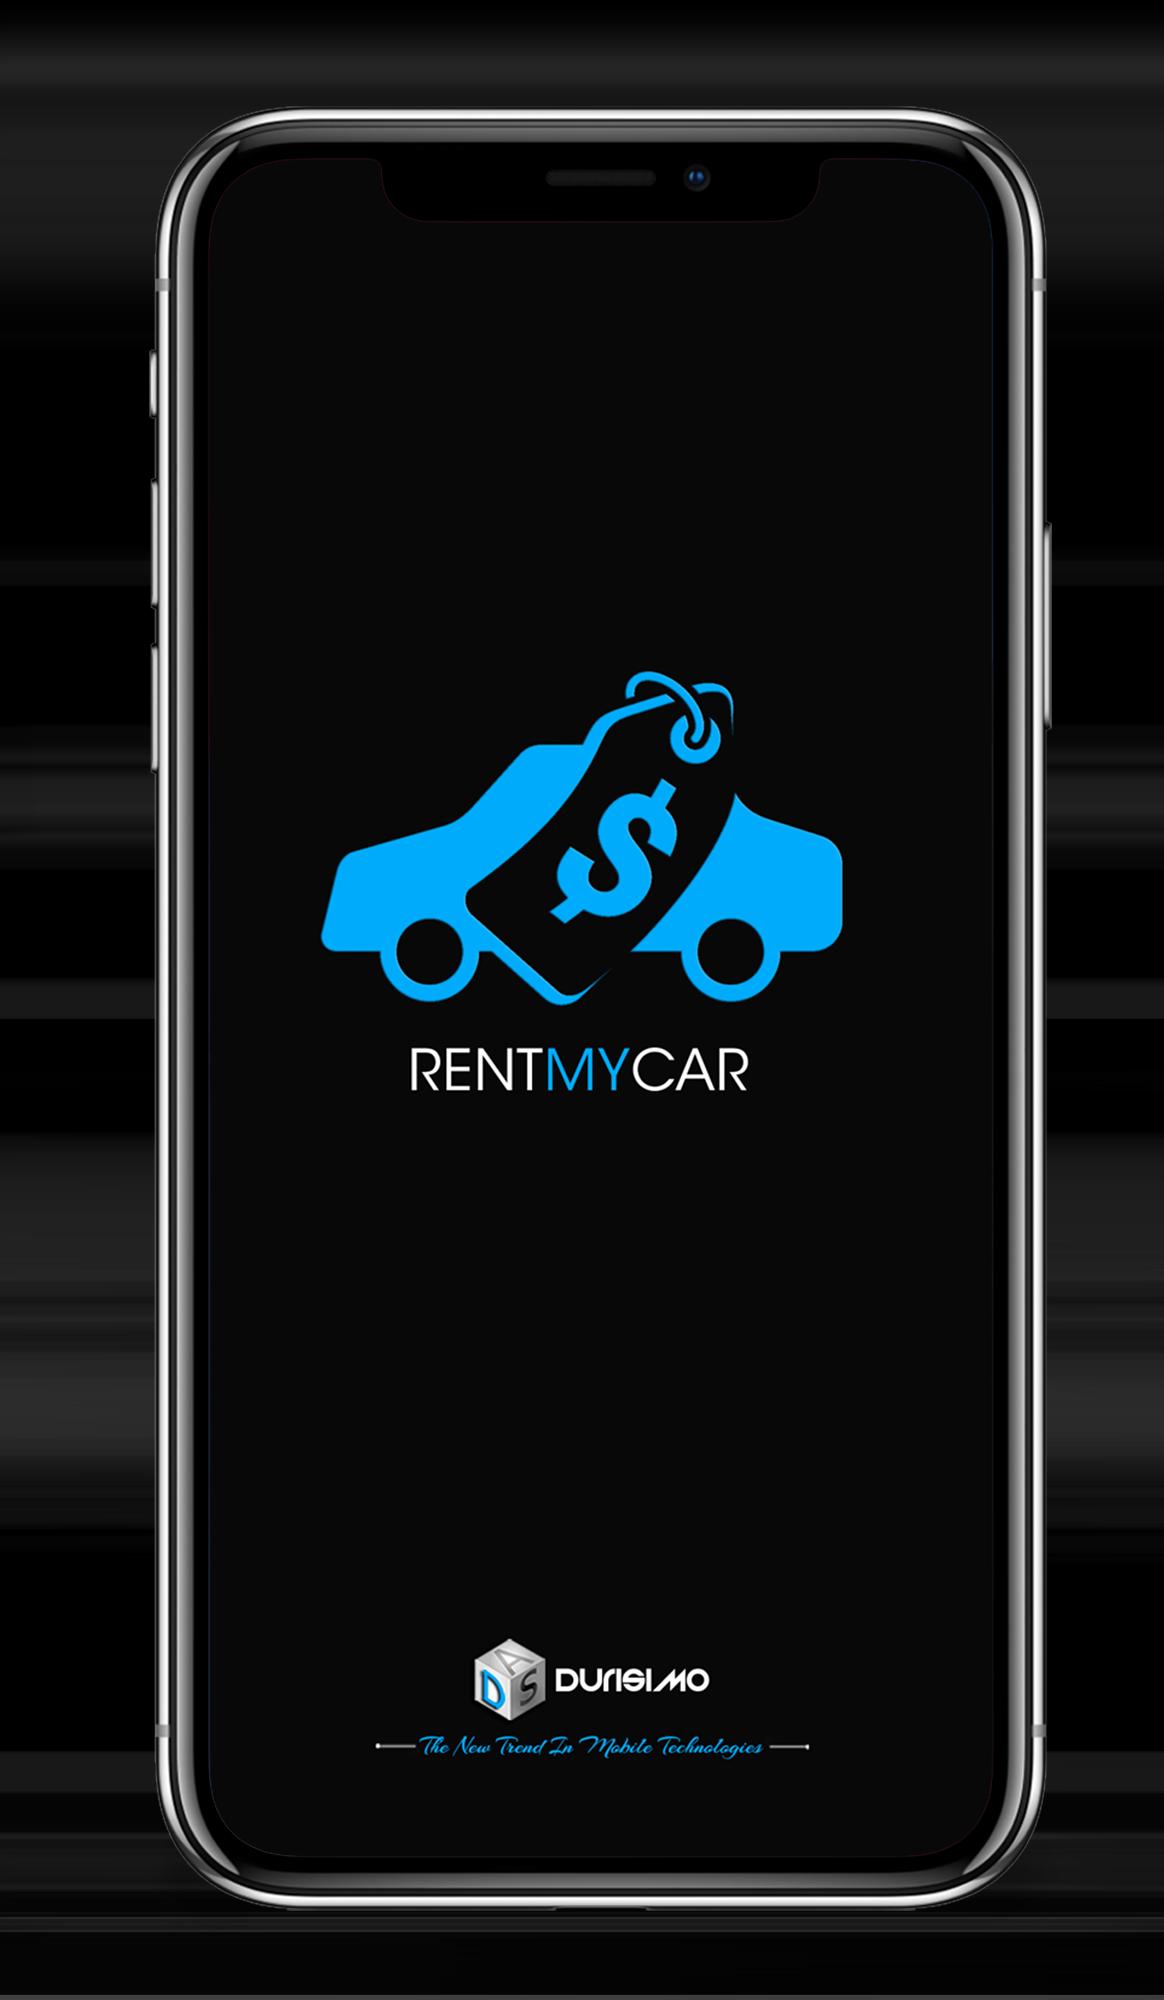 Rent Your Car